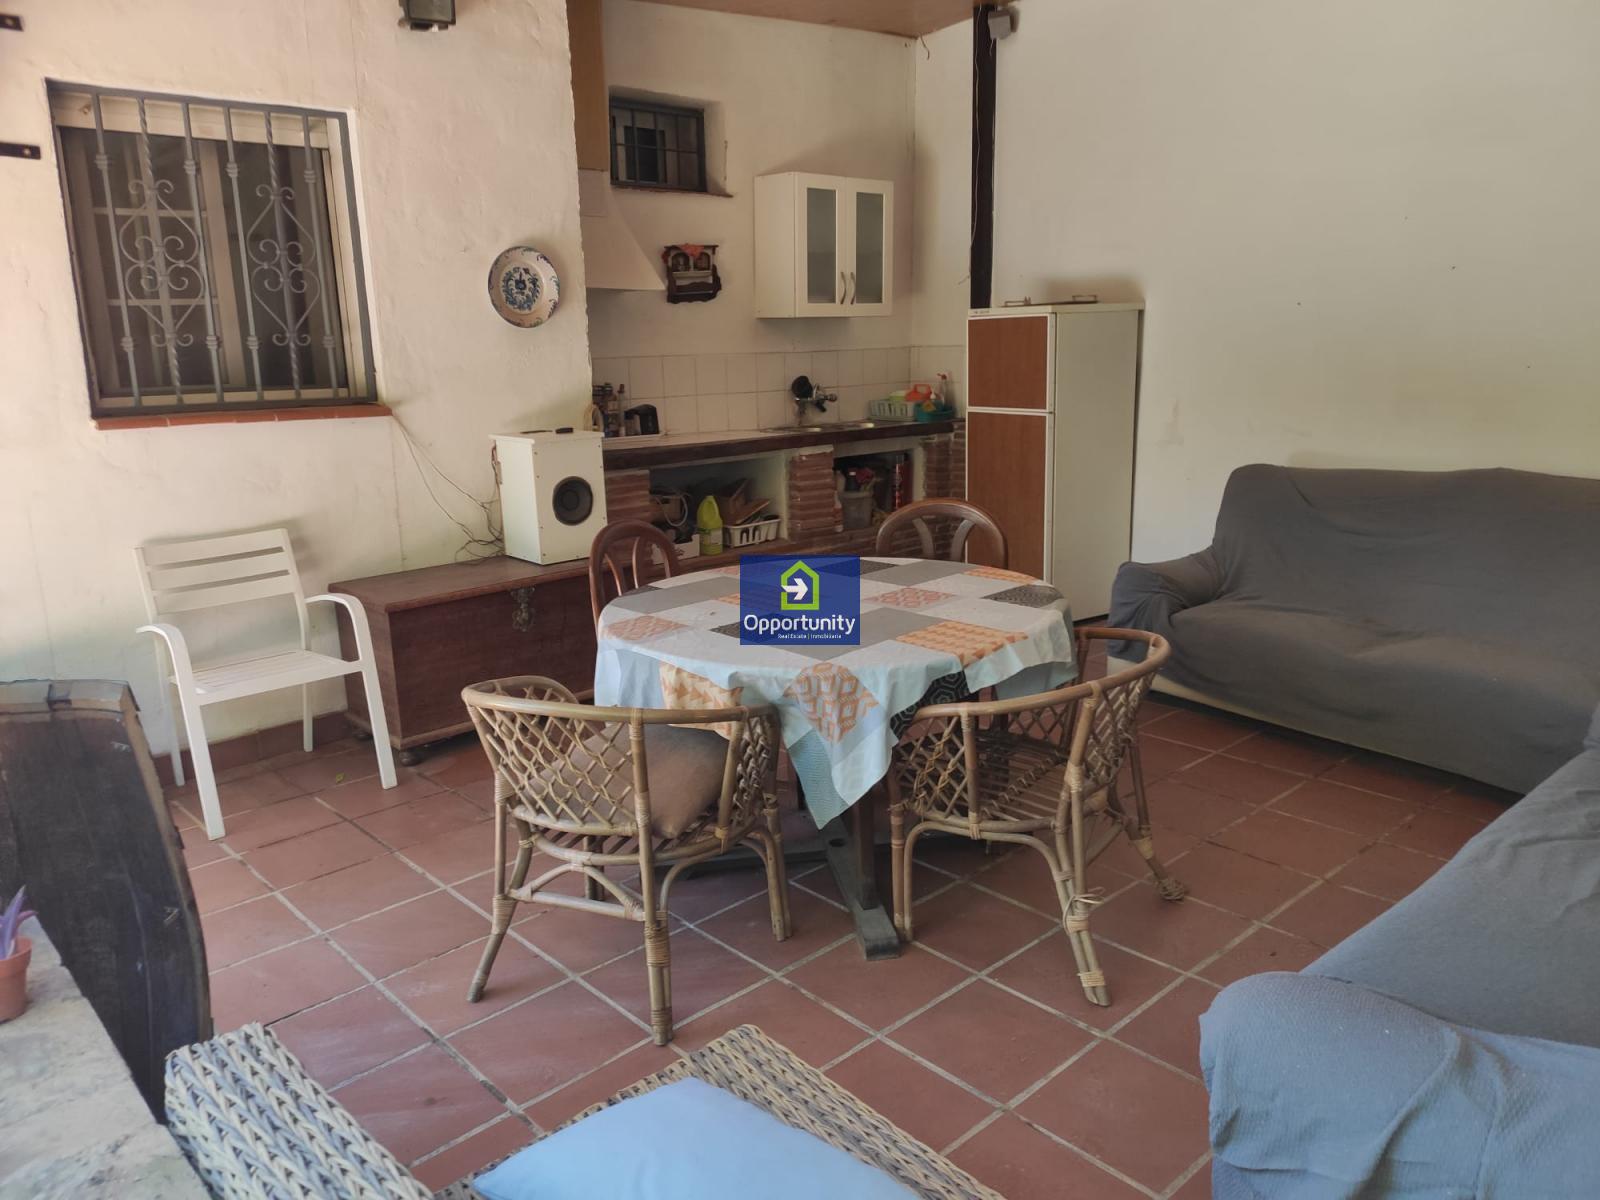 Chalet for rent in Cerrillo de Maracena (Granada), 750 €/month (Season)